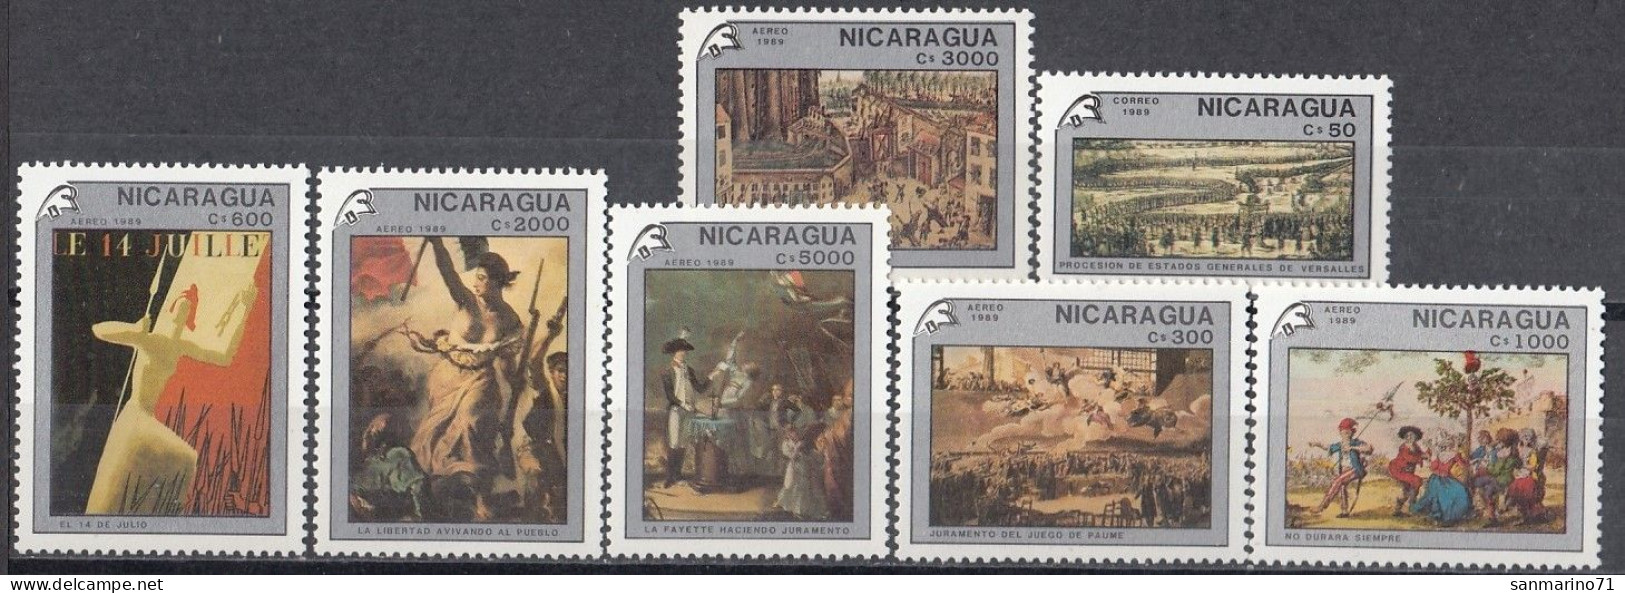 NICARAGUA 2968-2974,unused - French Revolution